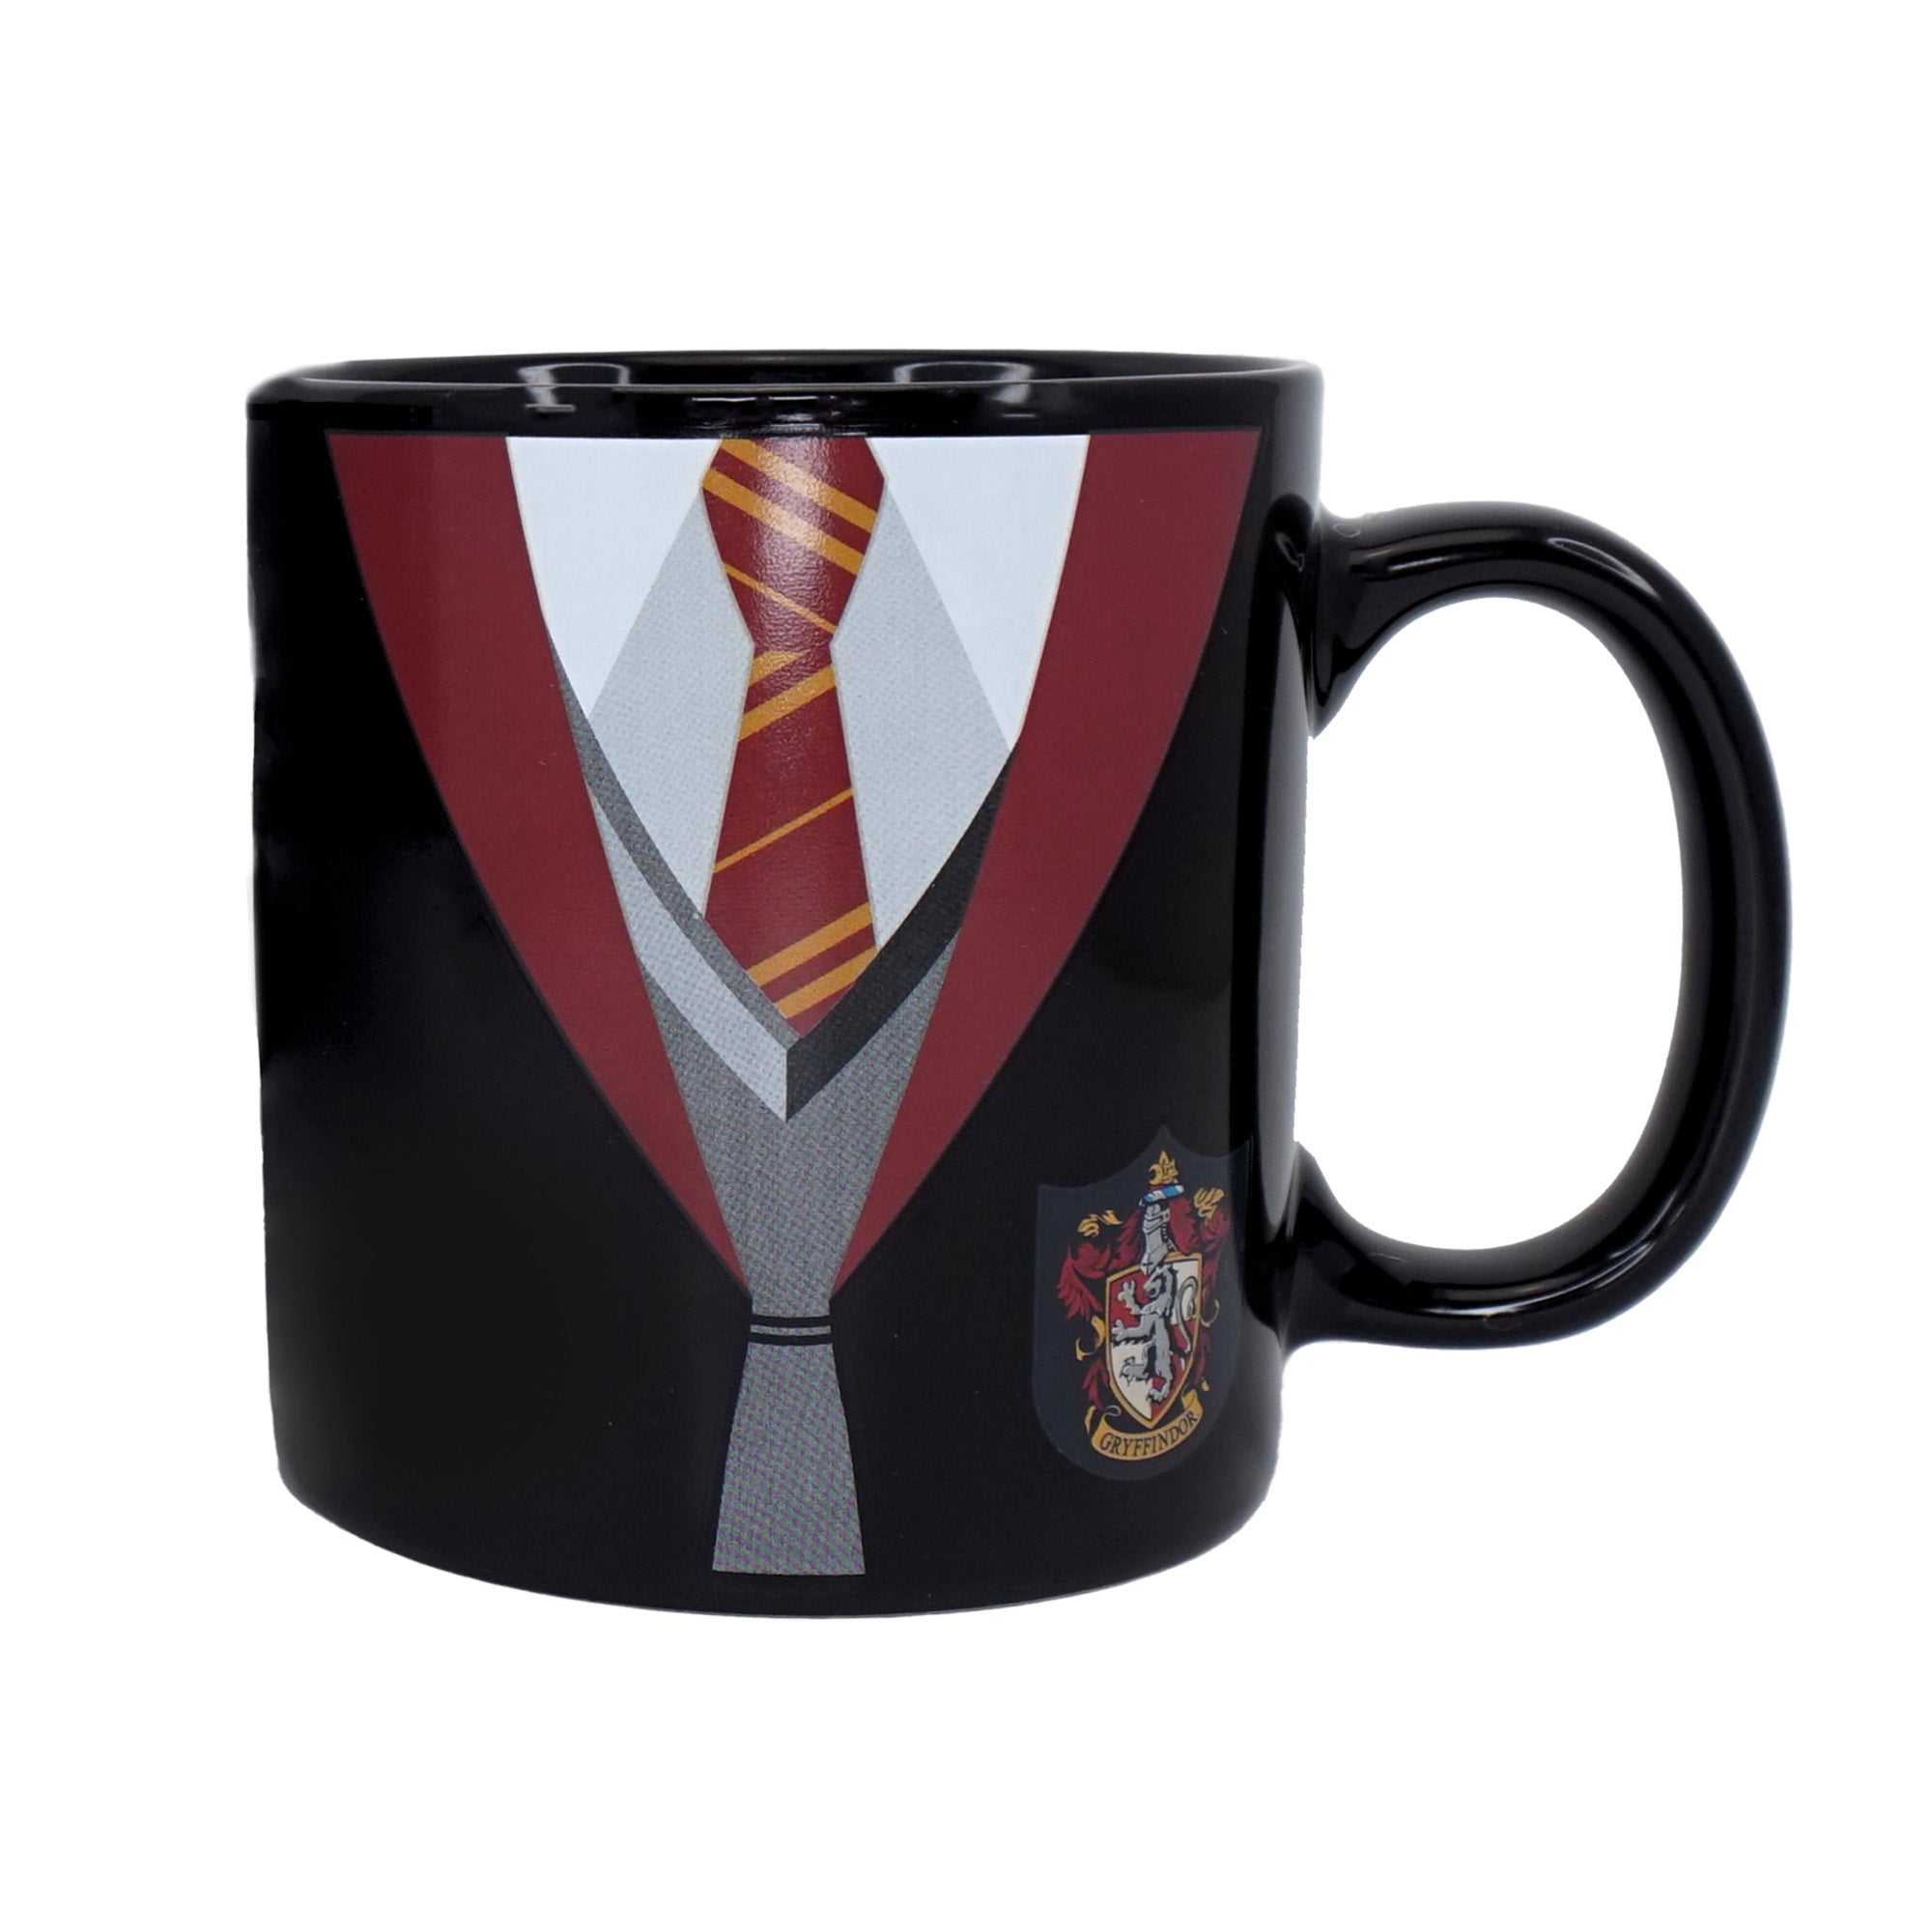 Mug Heat Changing Boxed (400ml) Harry Potter (Uniform Gryff)